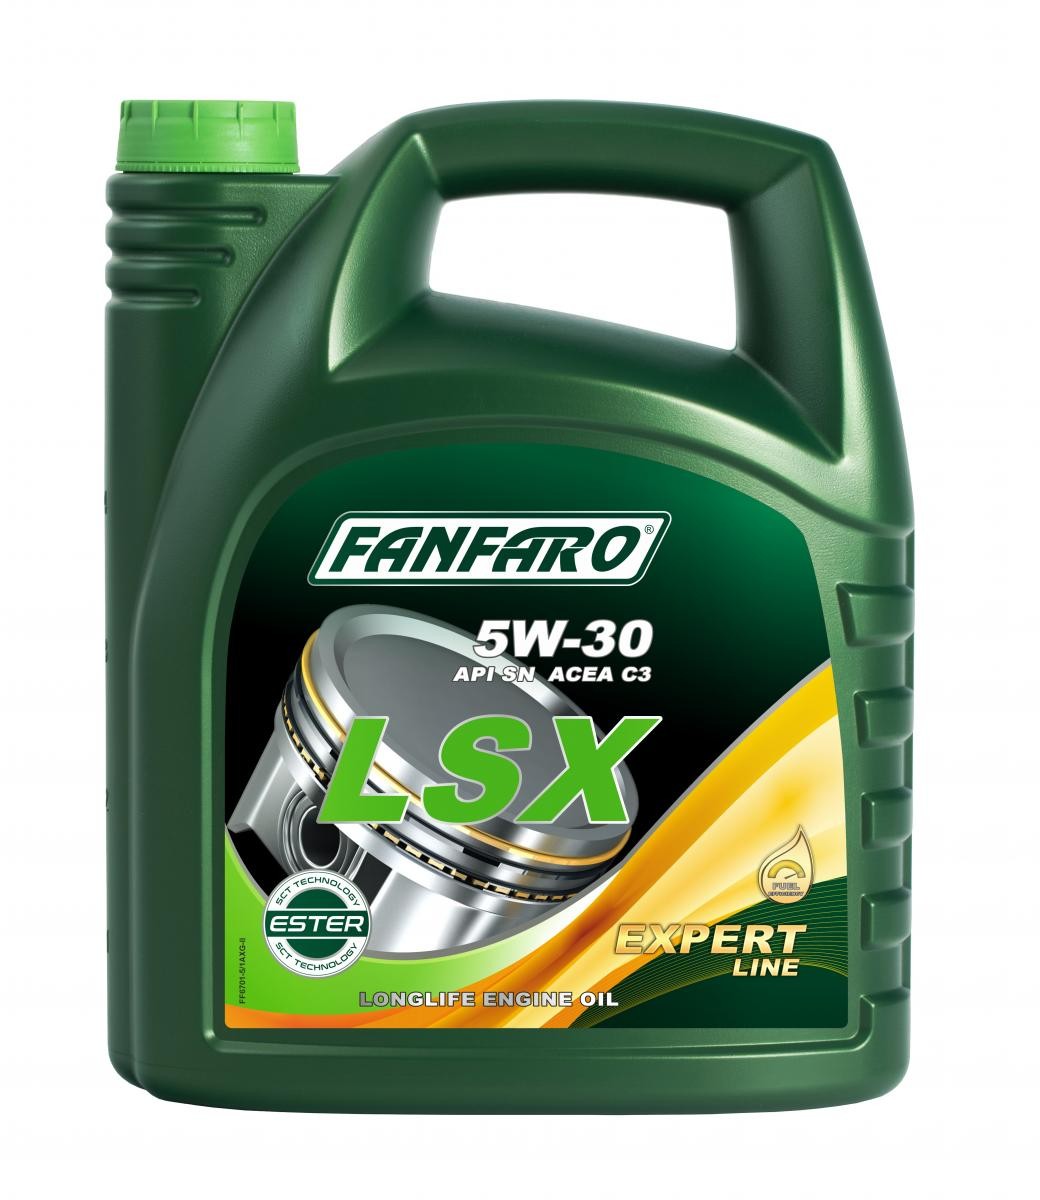 FF6701-5 FANFARO Expert Line, LSX 5W-30, 5l Motoröl FF6701-5 günstig kaufen